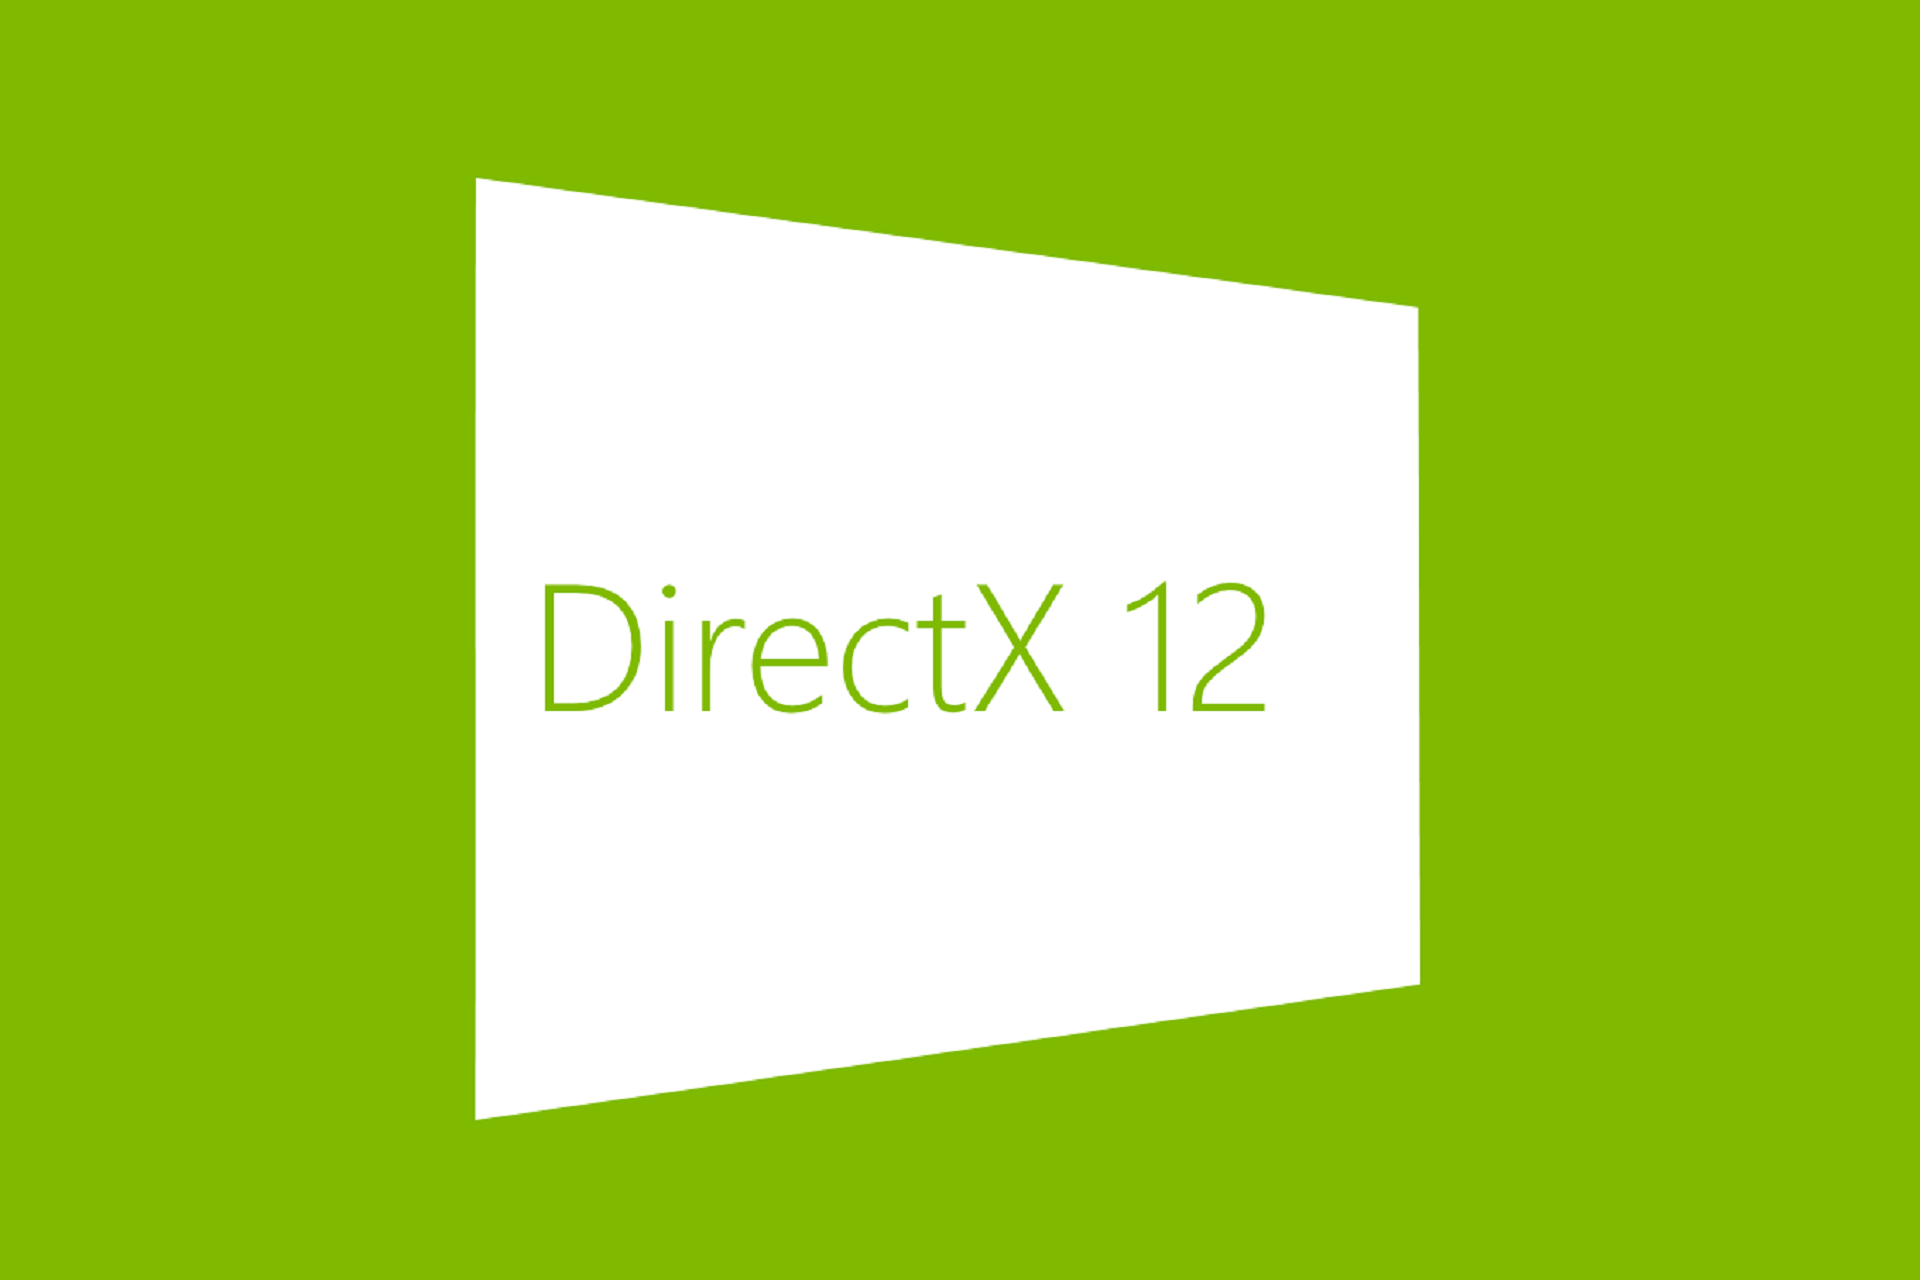 directx level 10.0 download